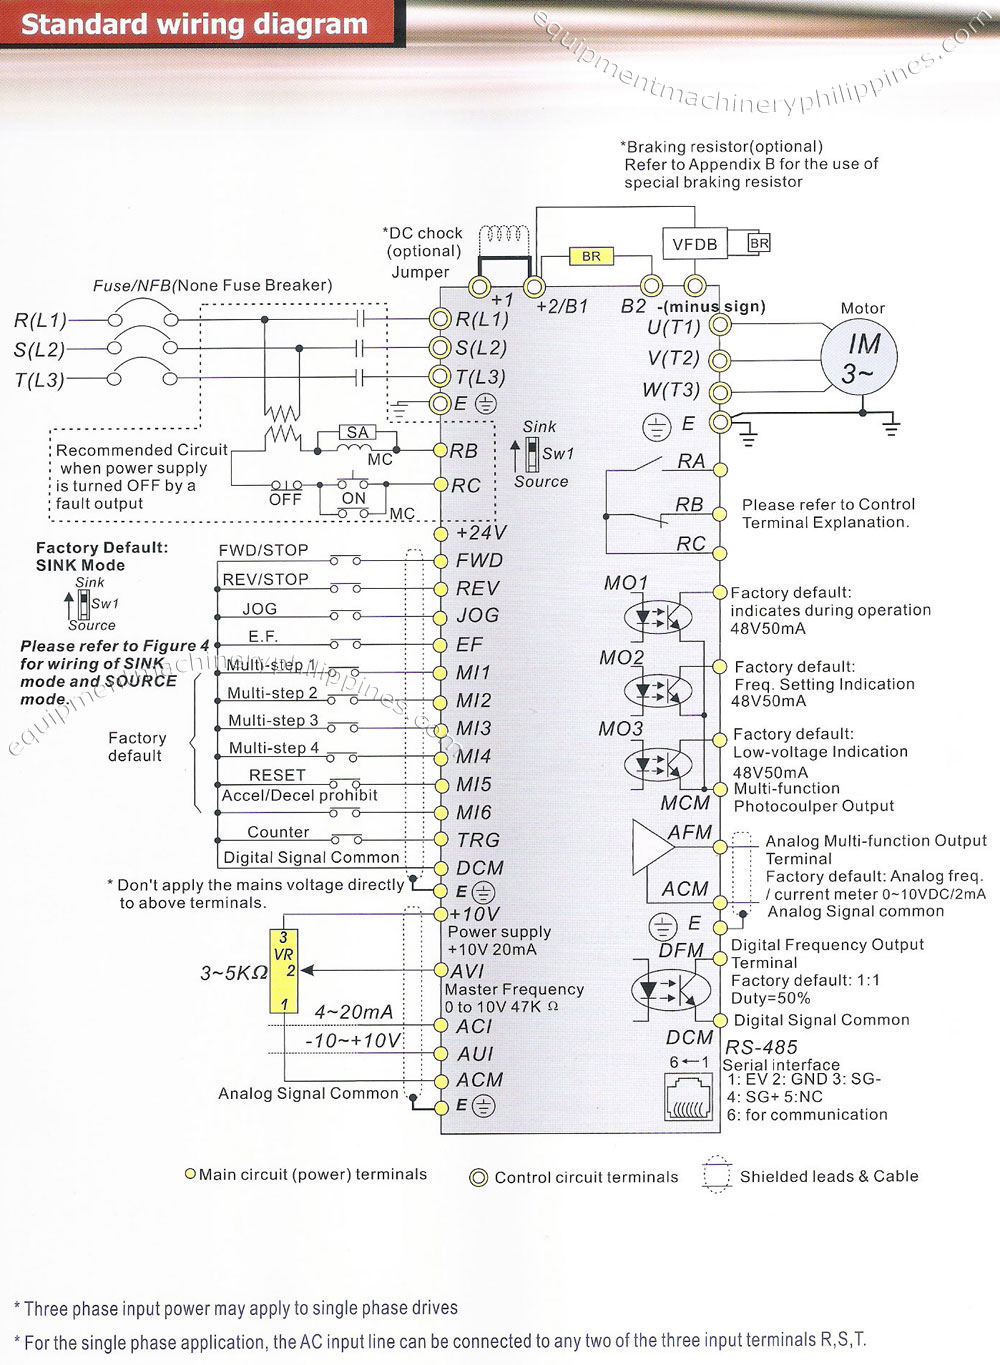 27_Delta_VFD_B_Series_Standard_Wiring_Diagram.jpg